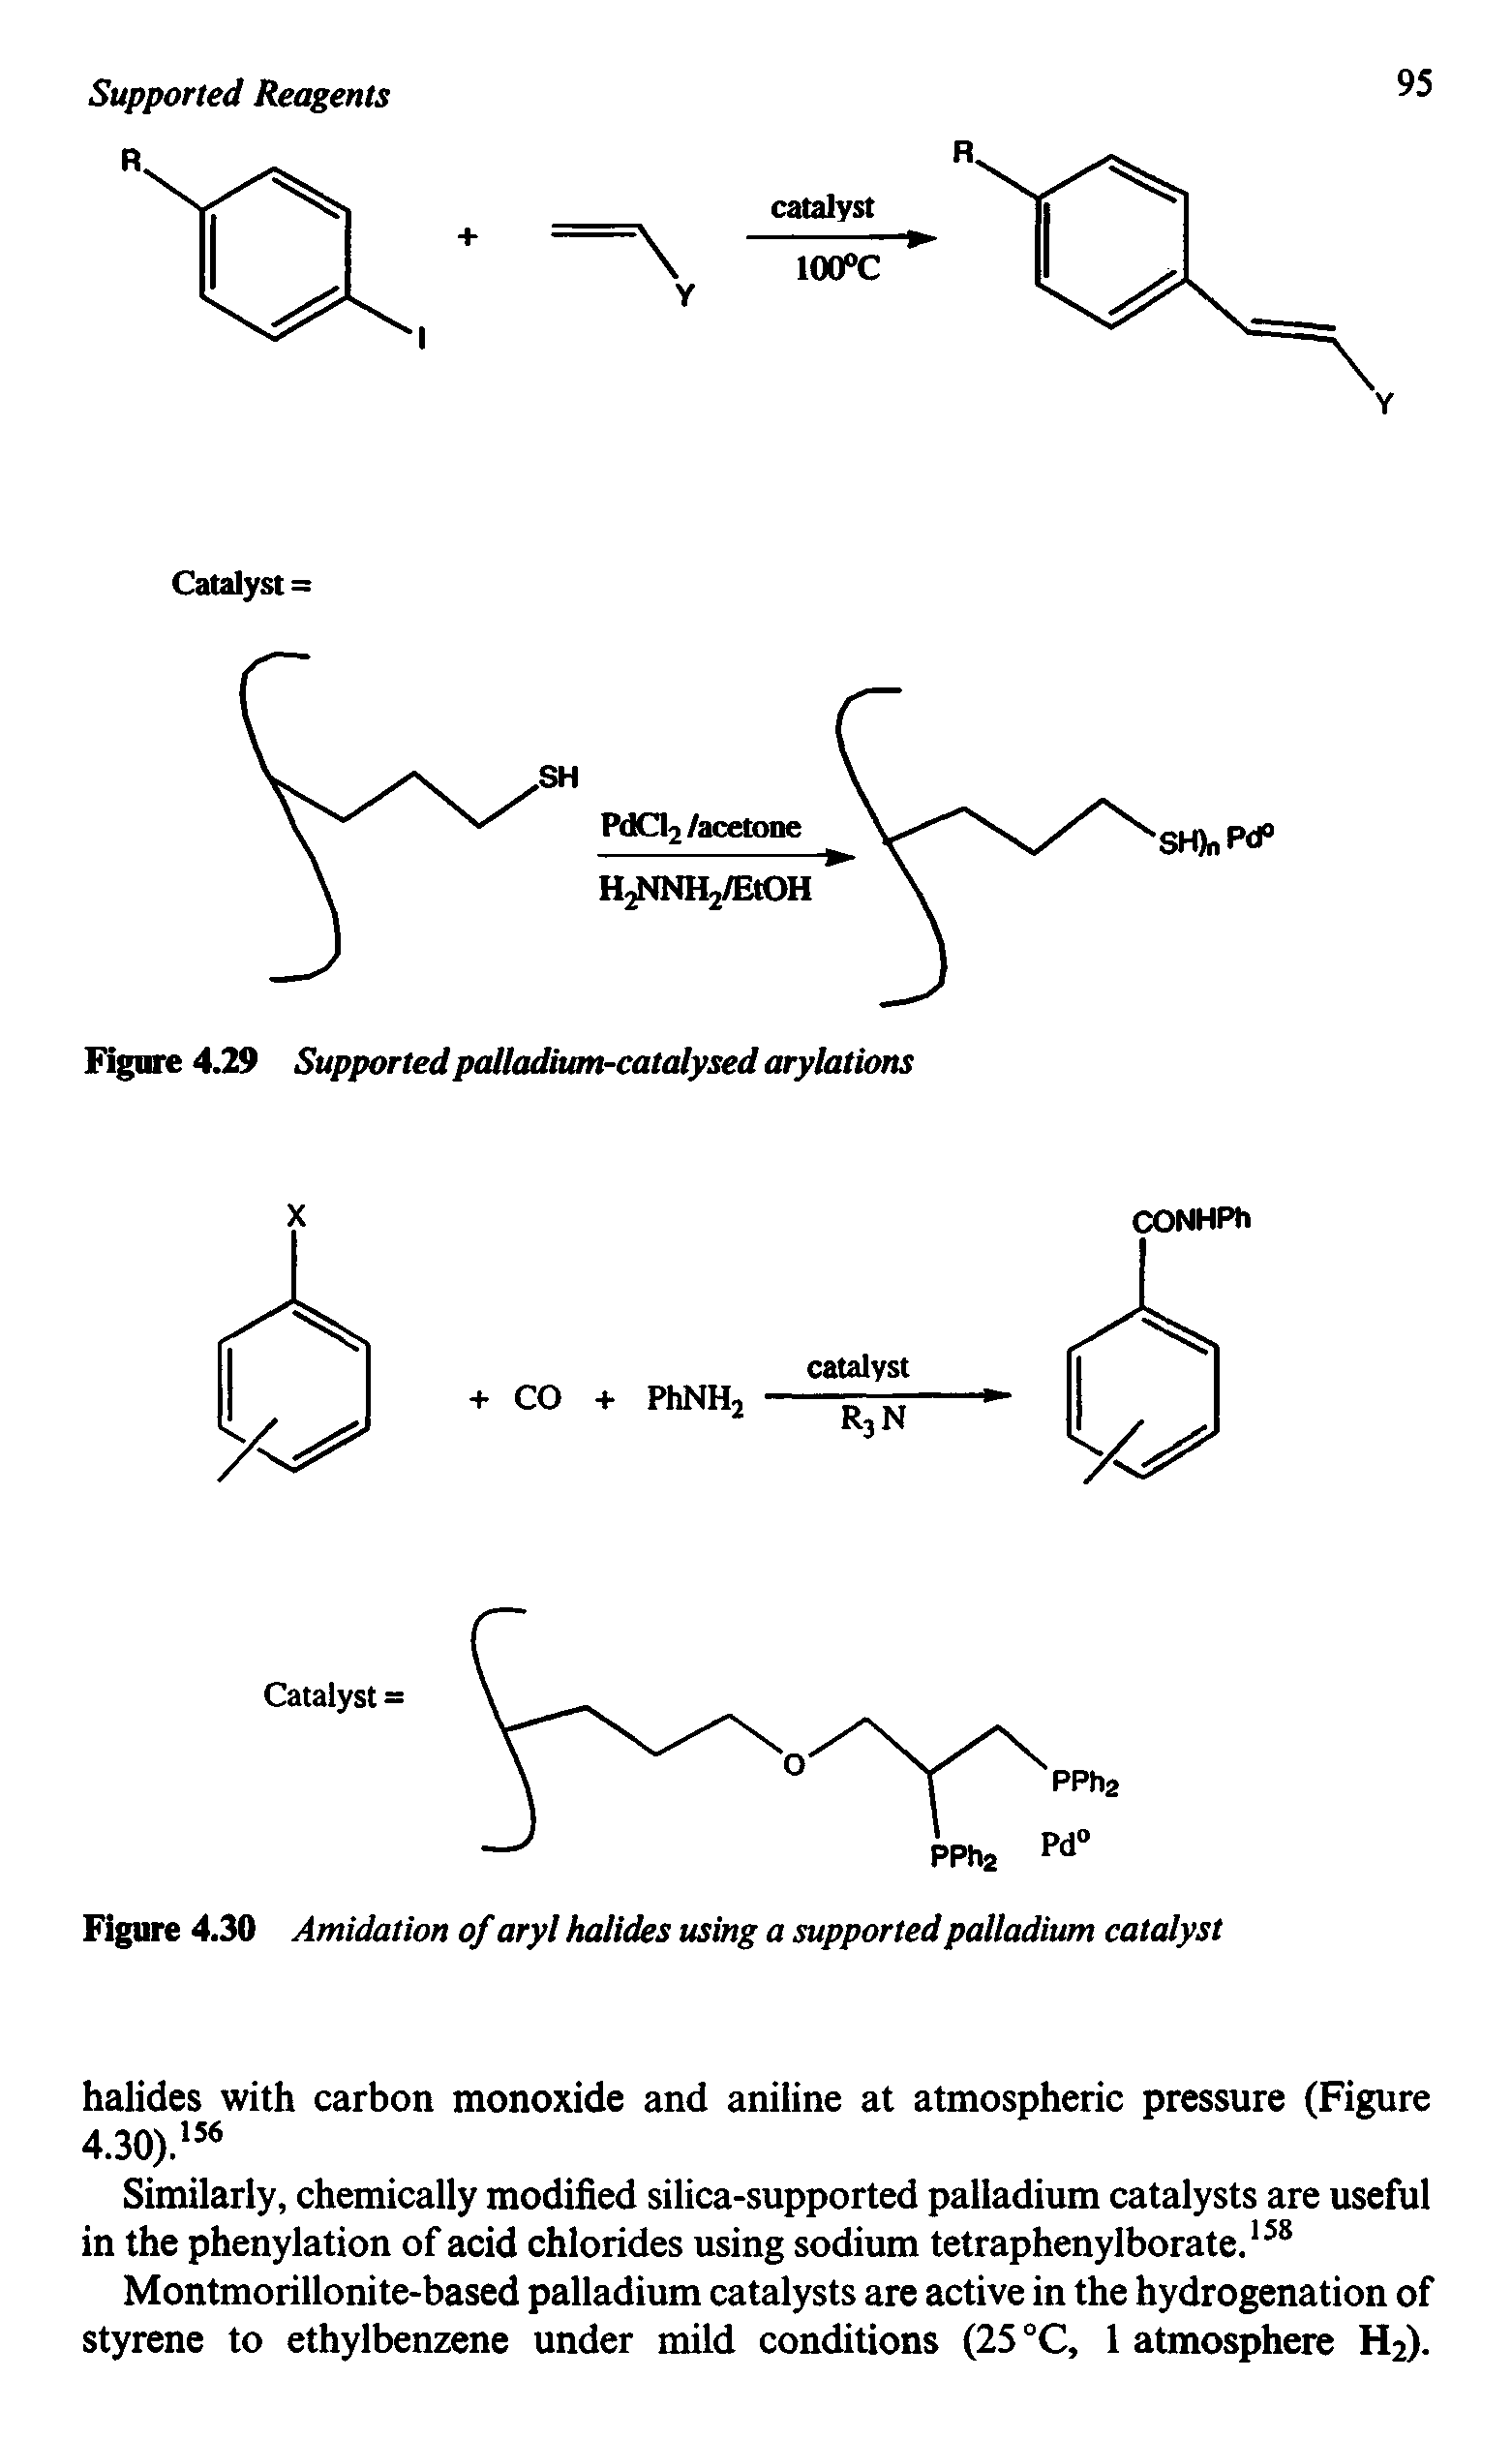 Figure 4.30 Amidation of aryl halides using a supported palladium catalyst...